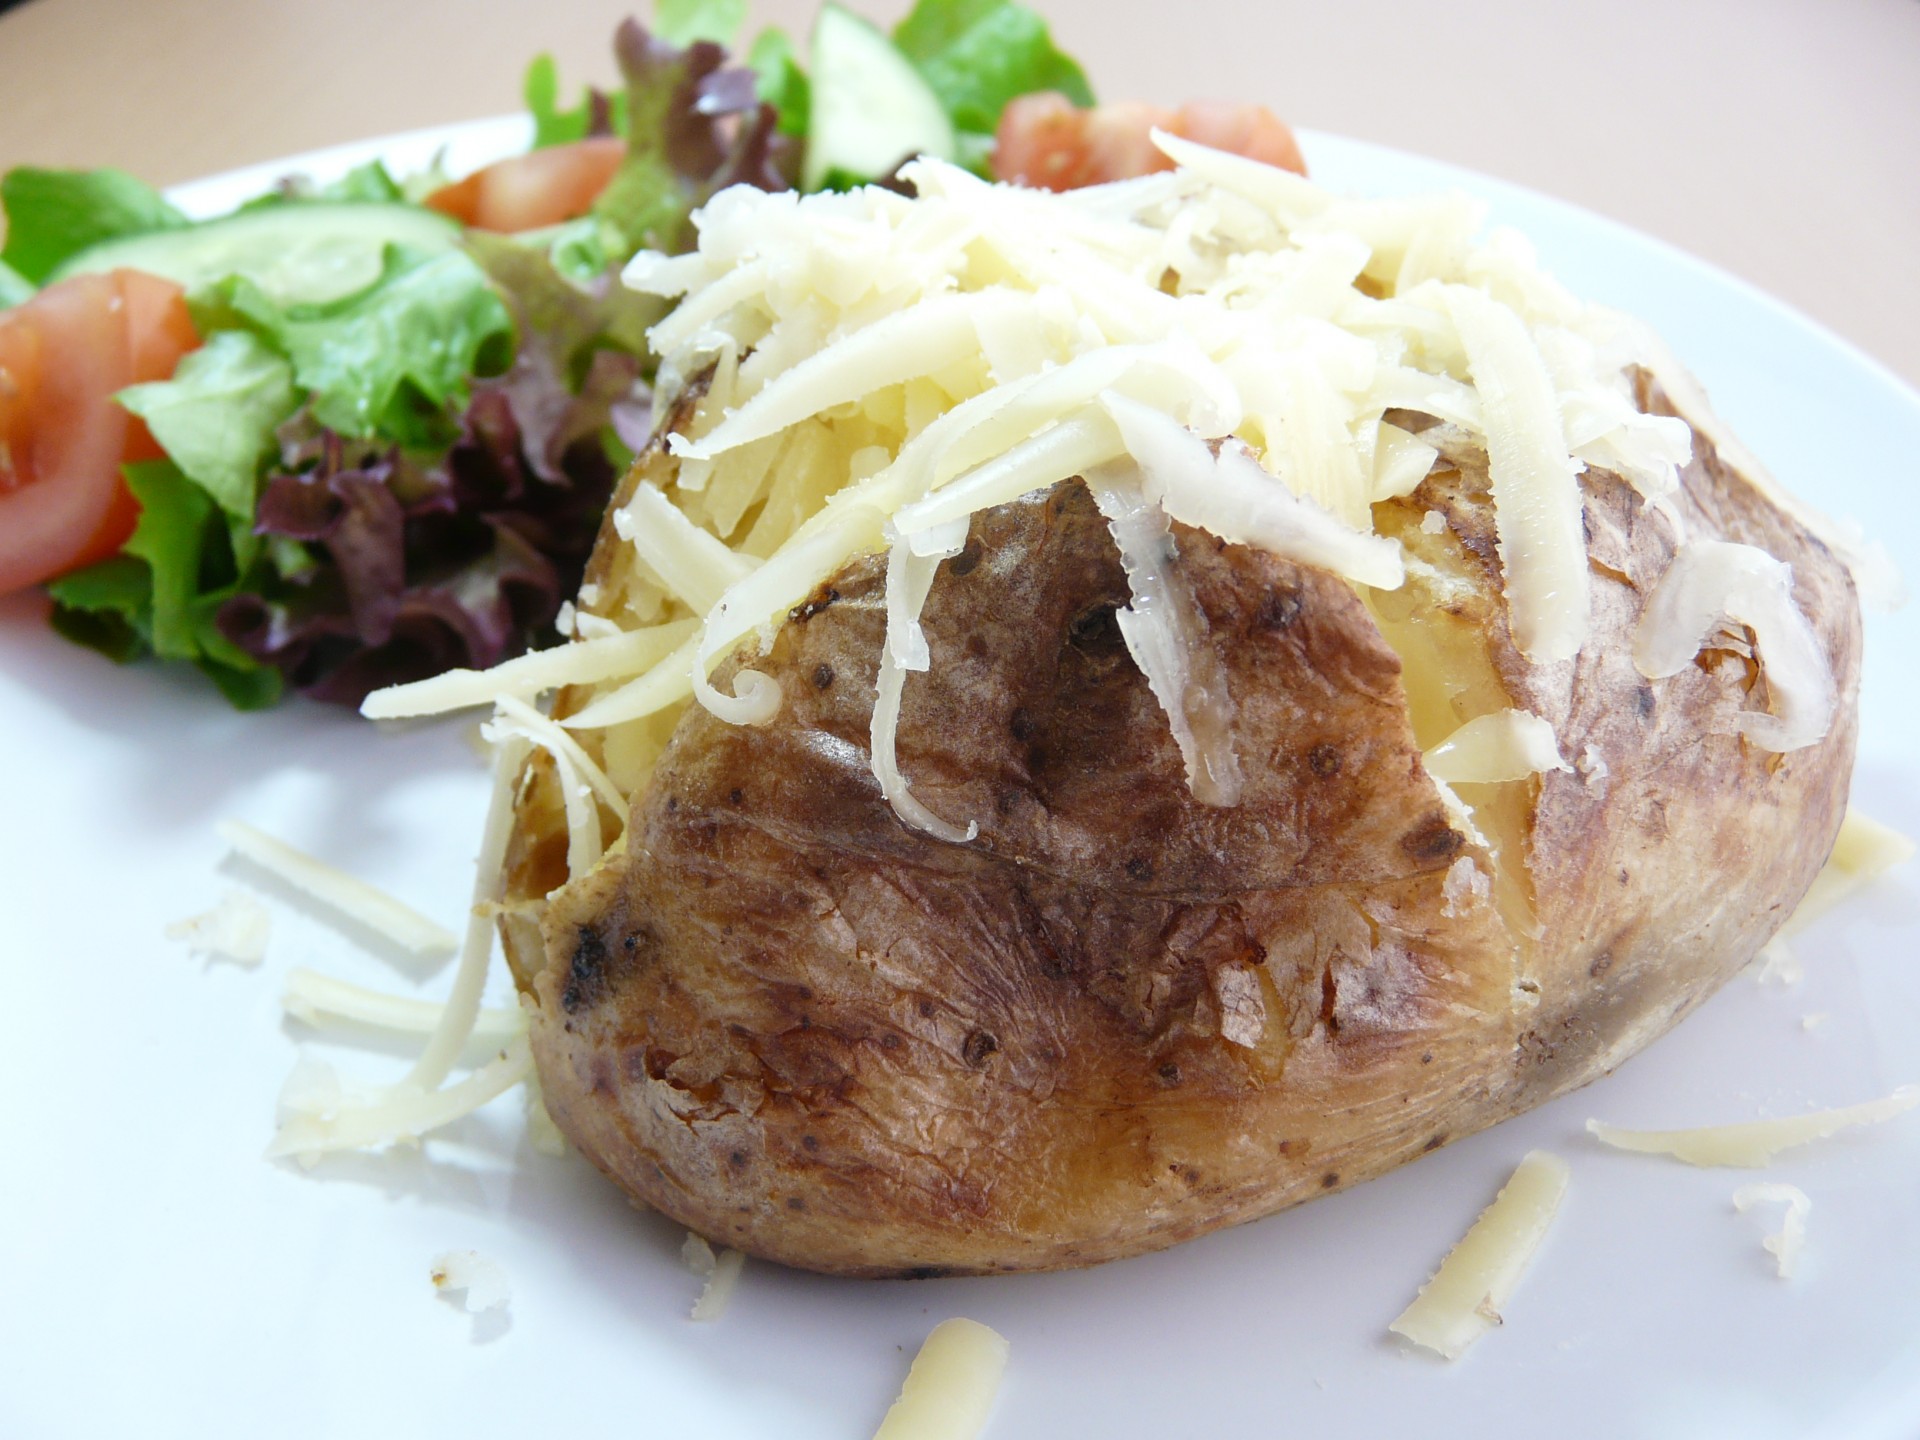 Baked Potato-Onion Wrap-Ups